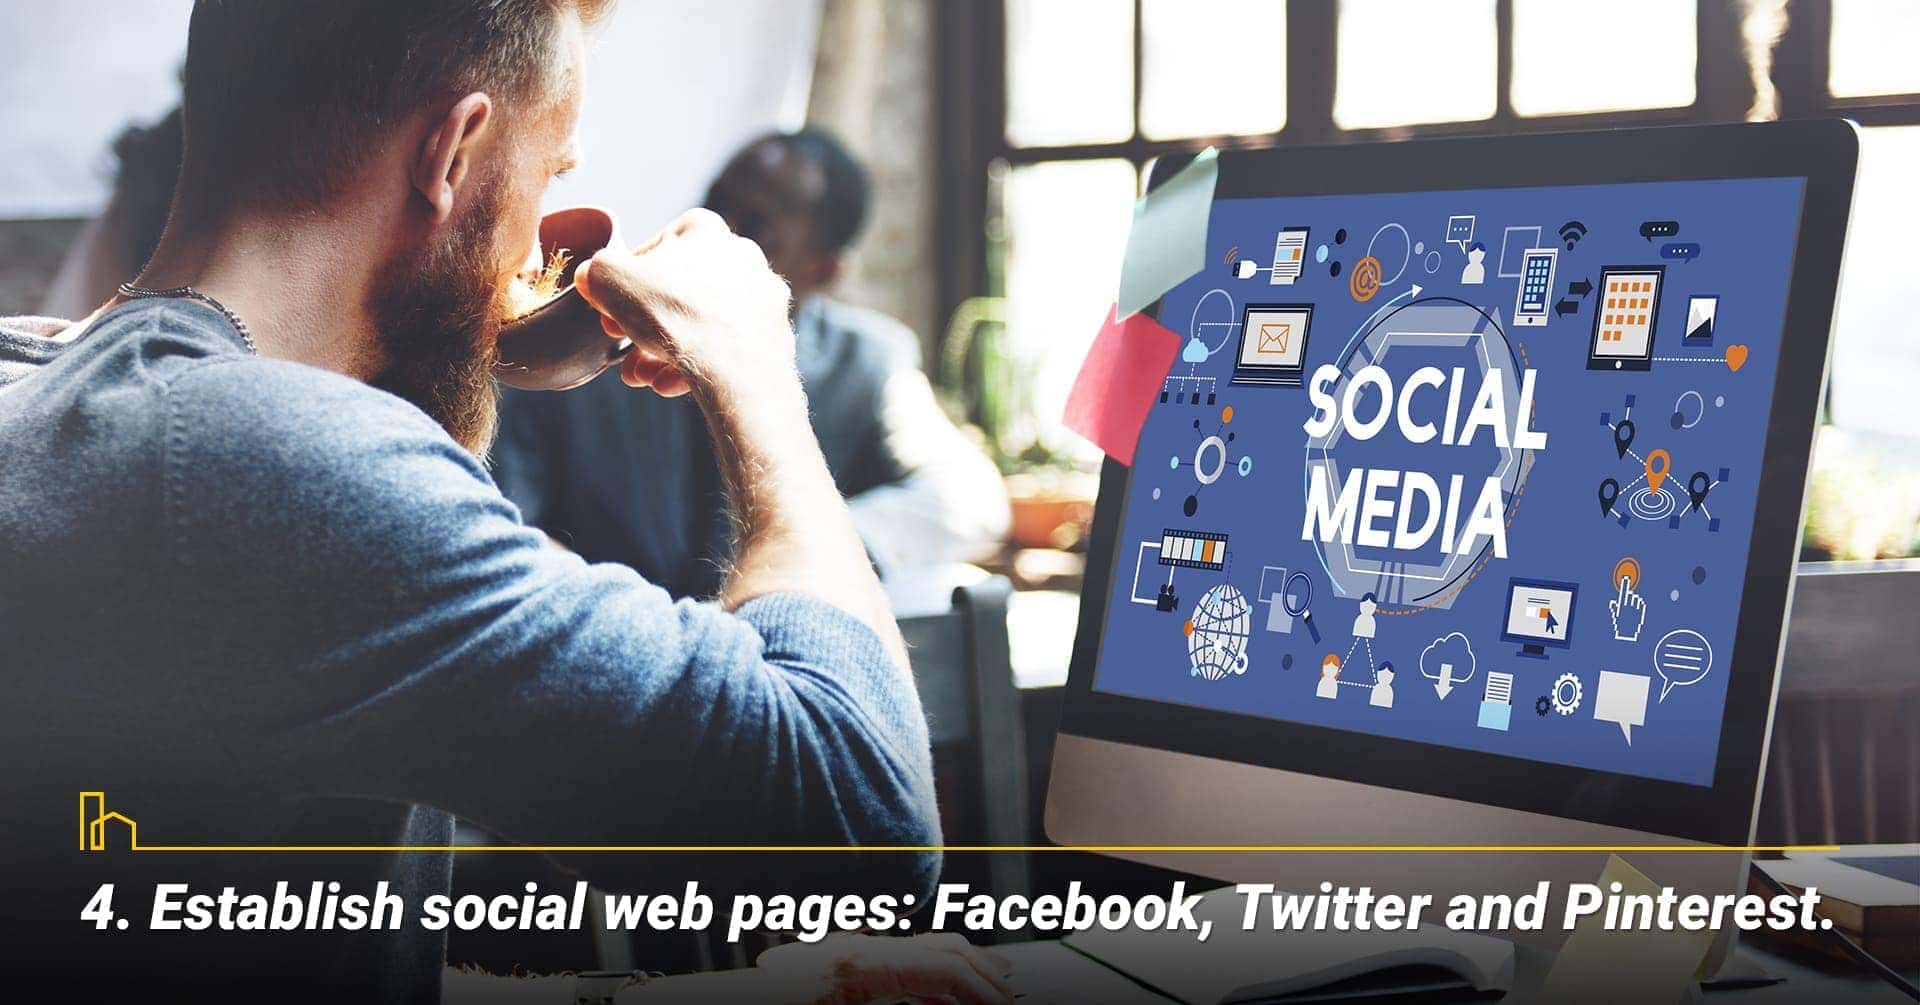 Establish social web pages: Facebook, Twitter and Pinterest, take advantage of Social Media platforms